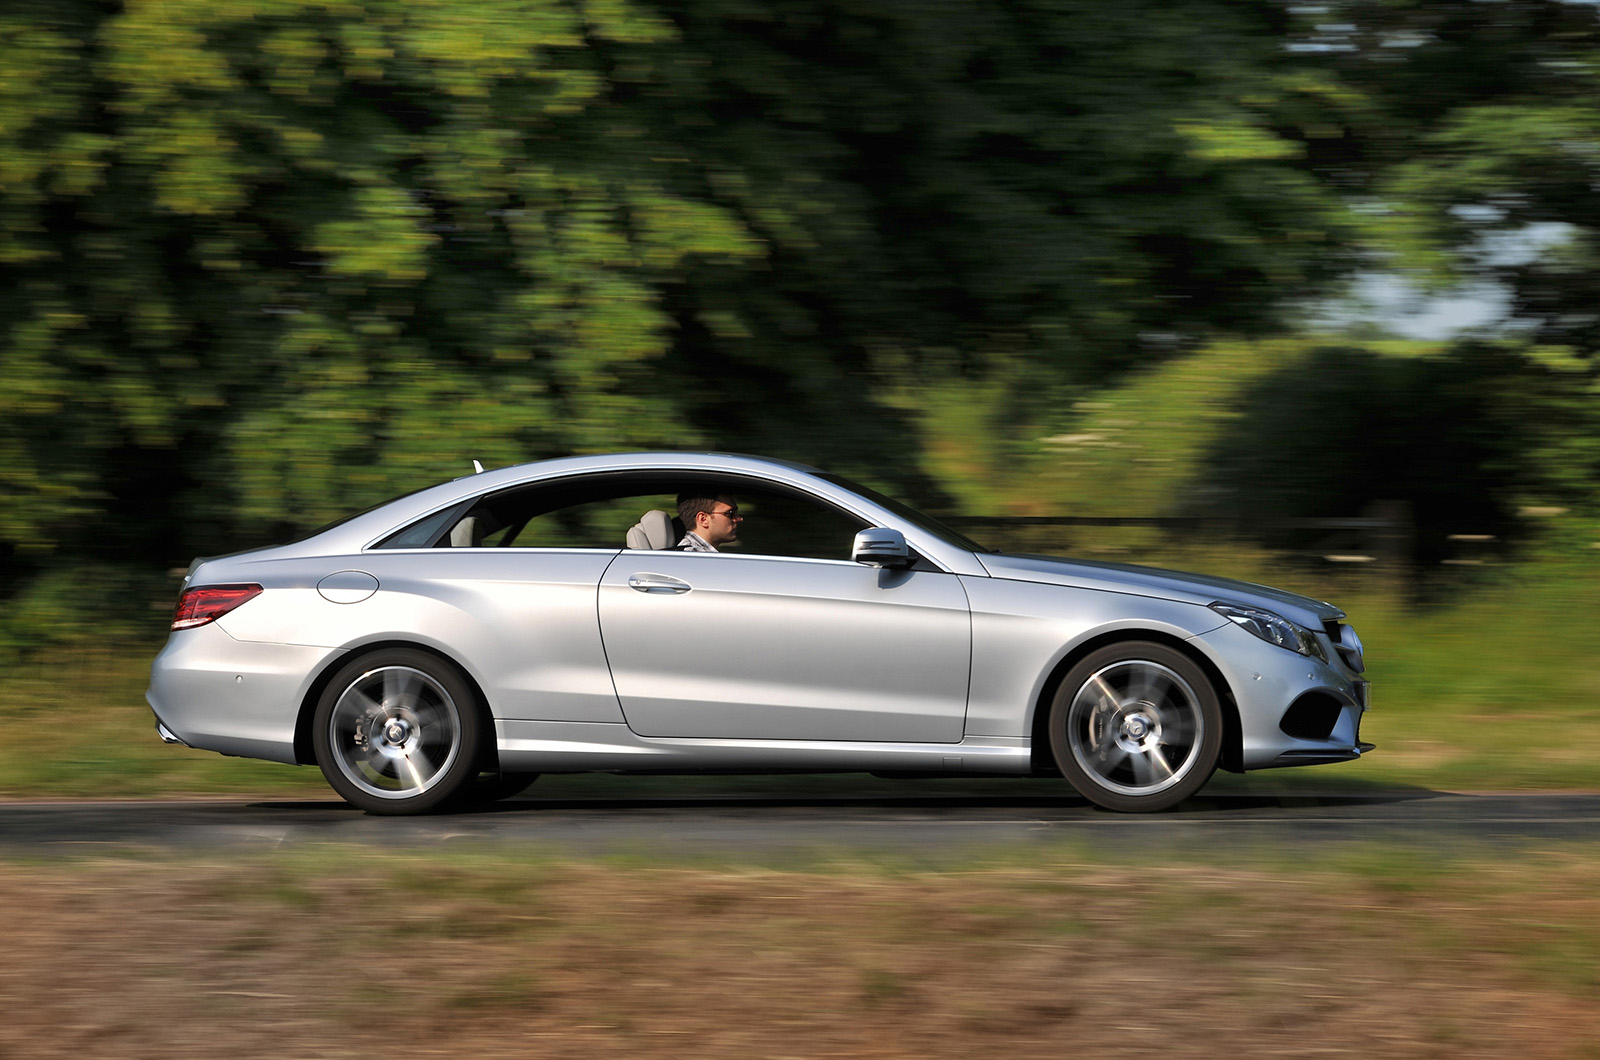 Mercedes e220 cdi coupe review #7